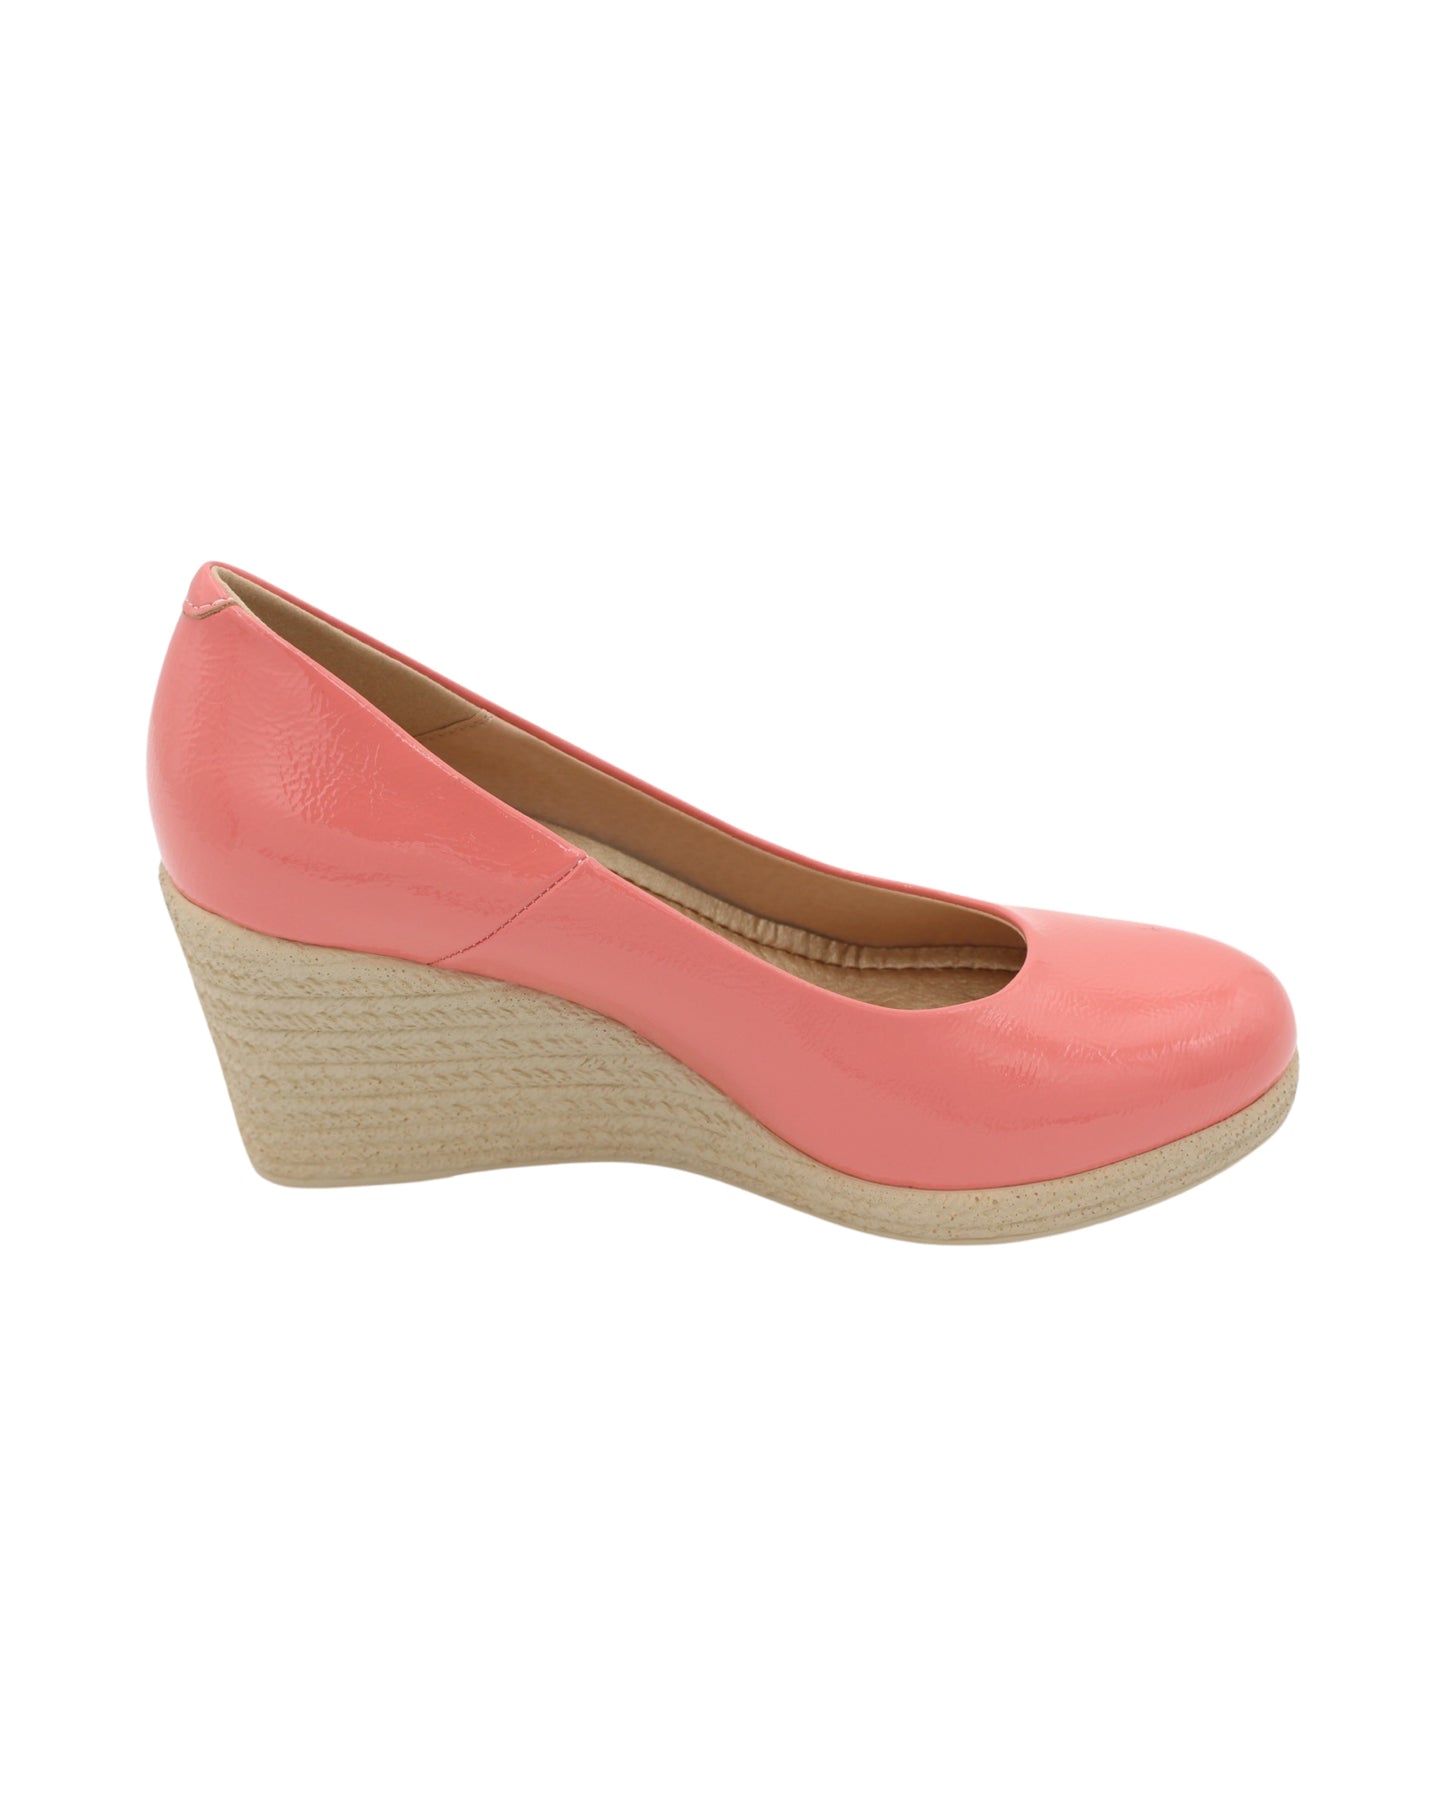 Zanni - Ladies Shoes Espadrilles Pink (2094)